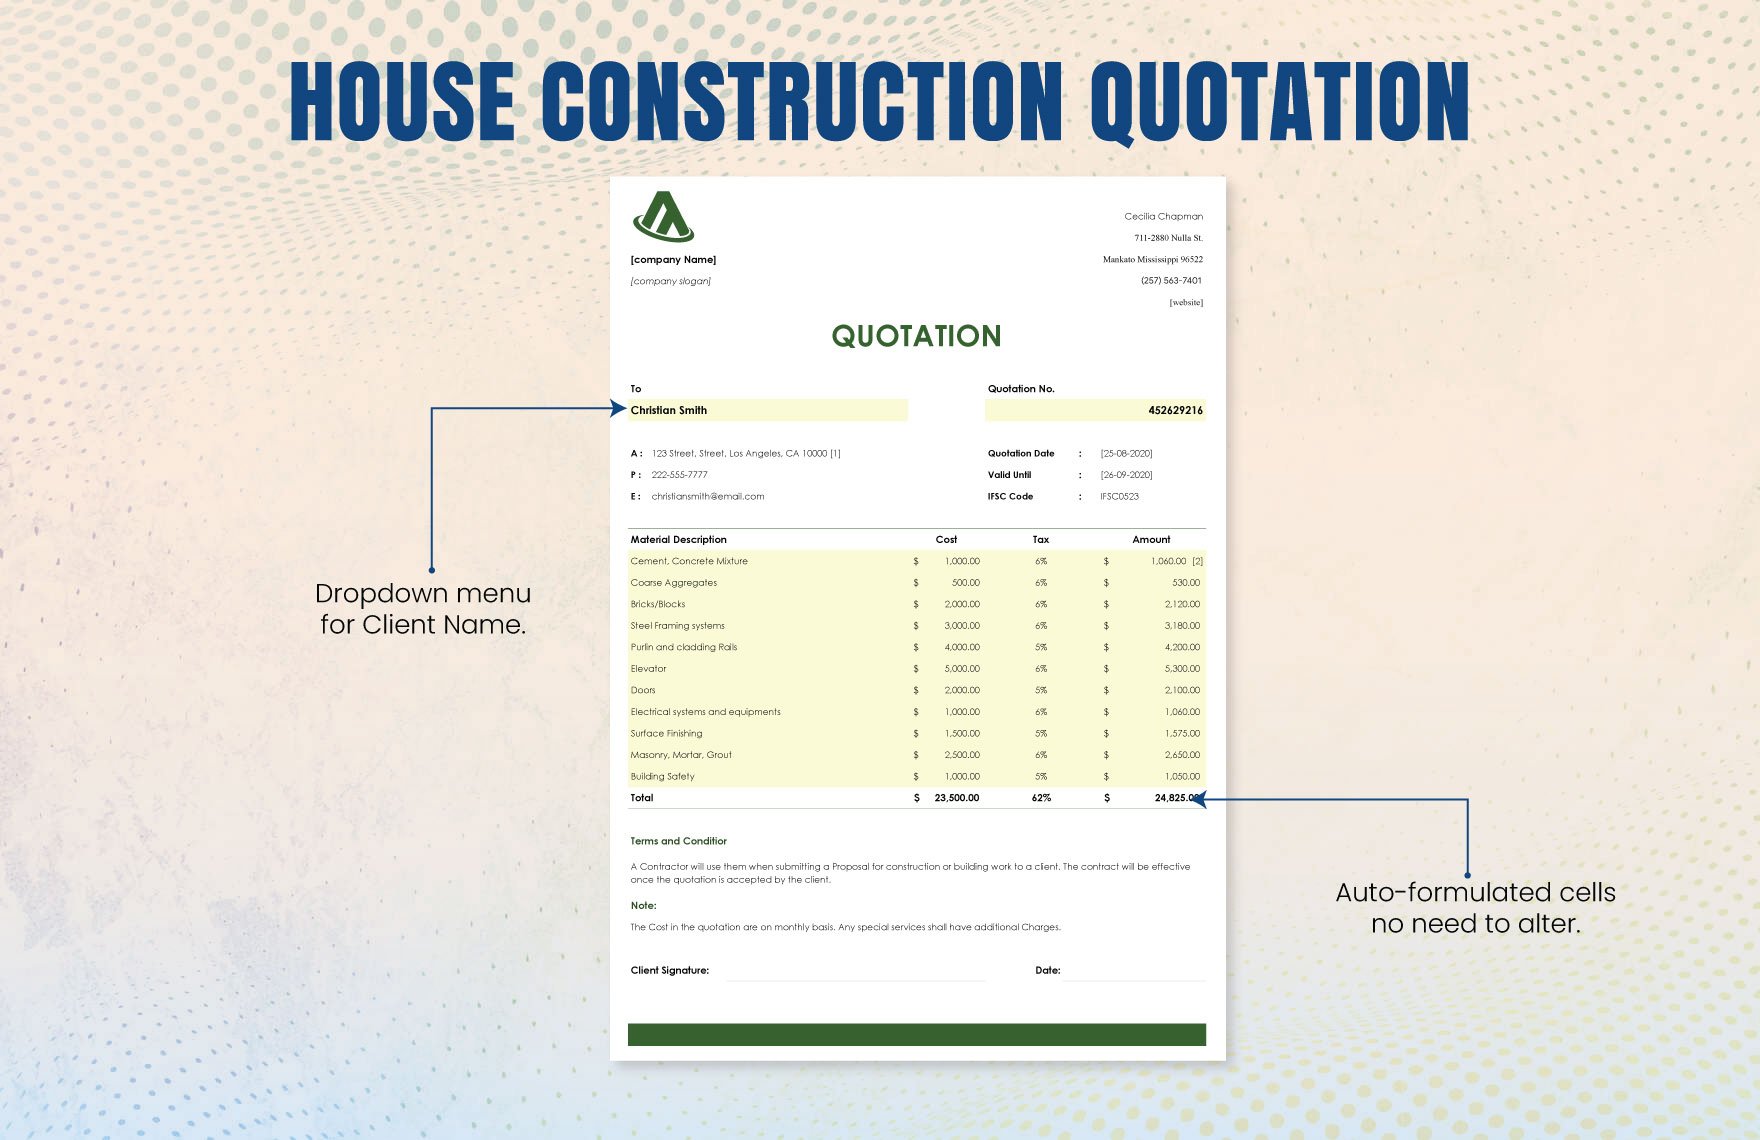 House Construction Quotation